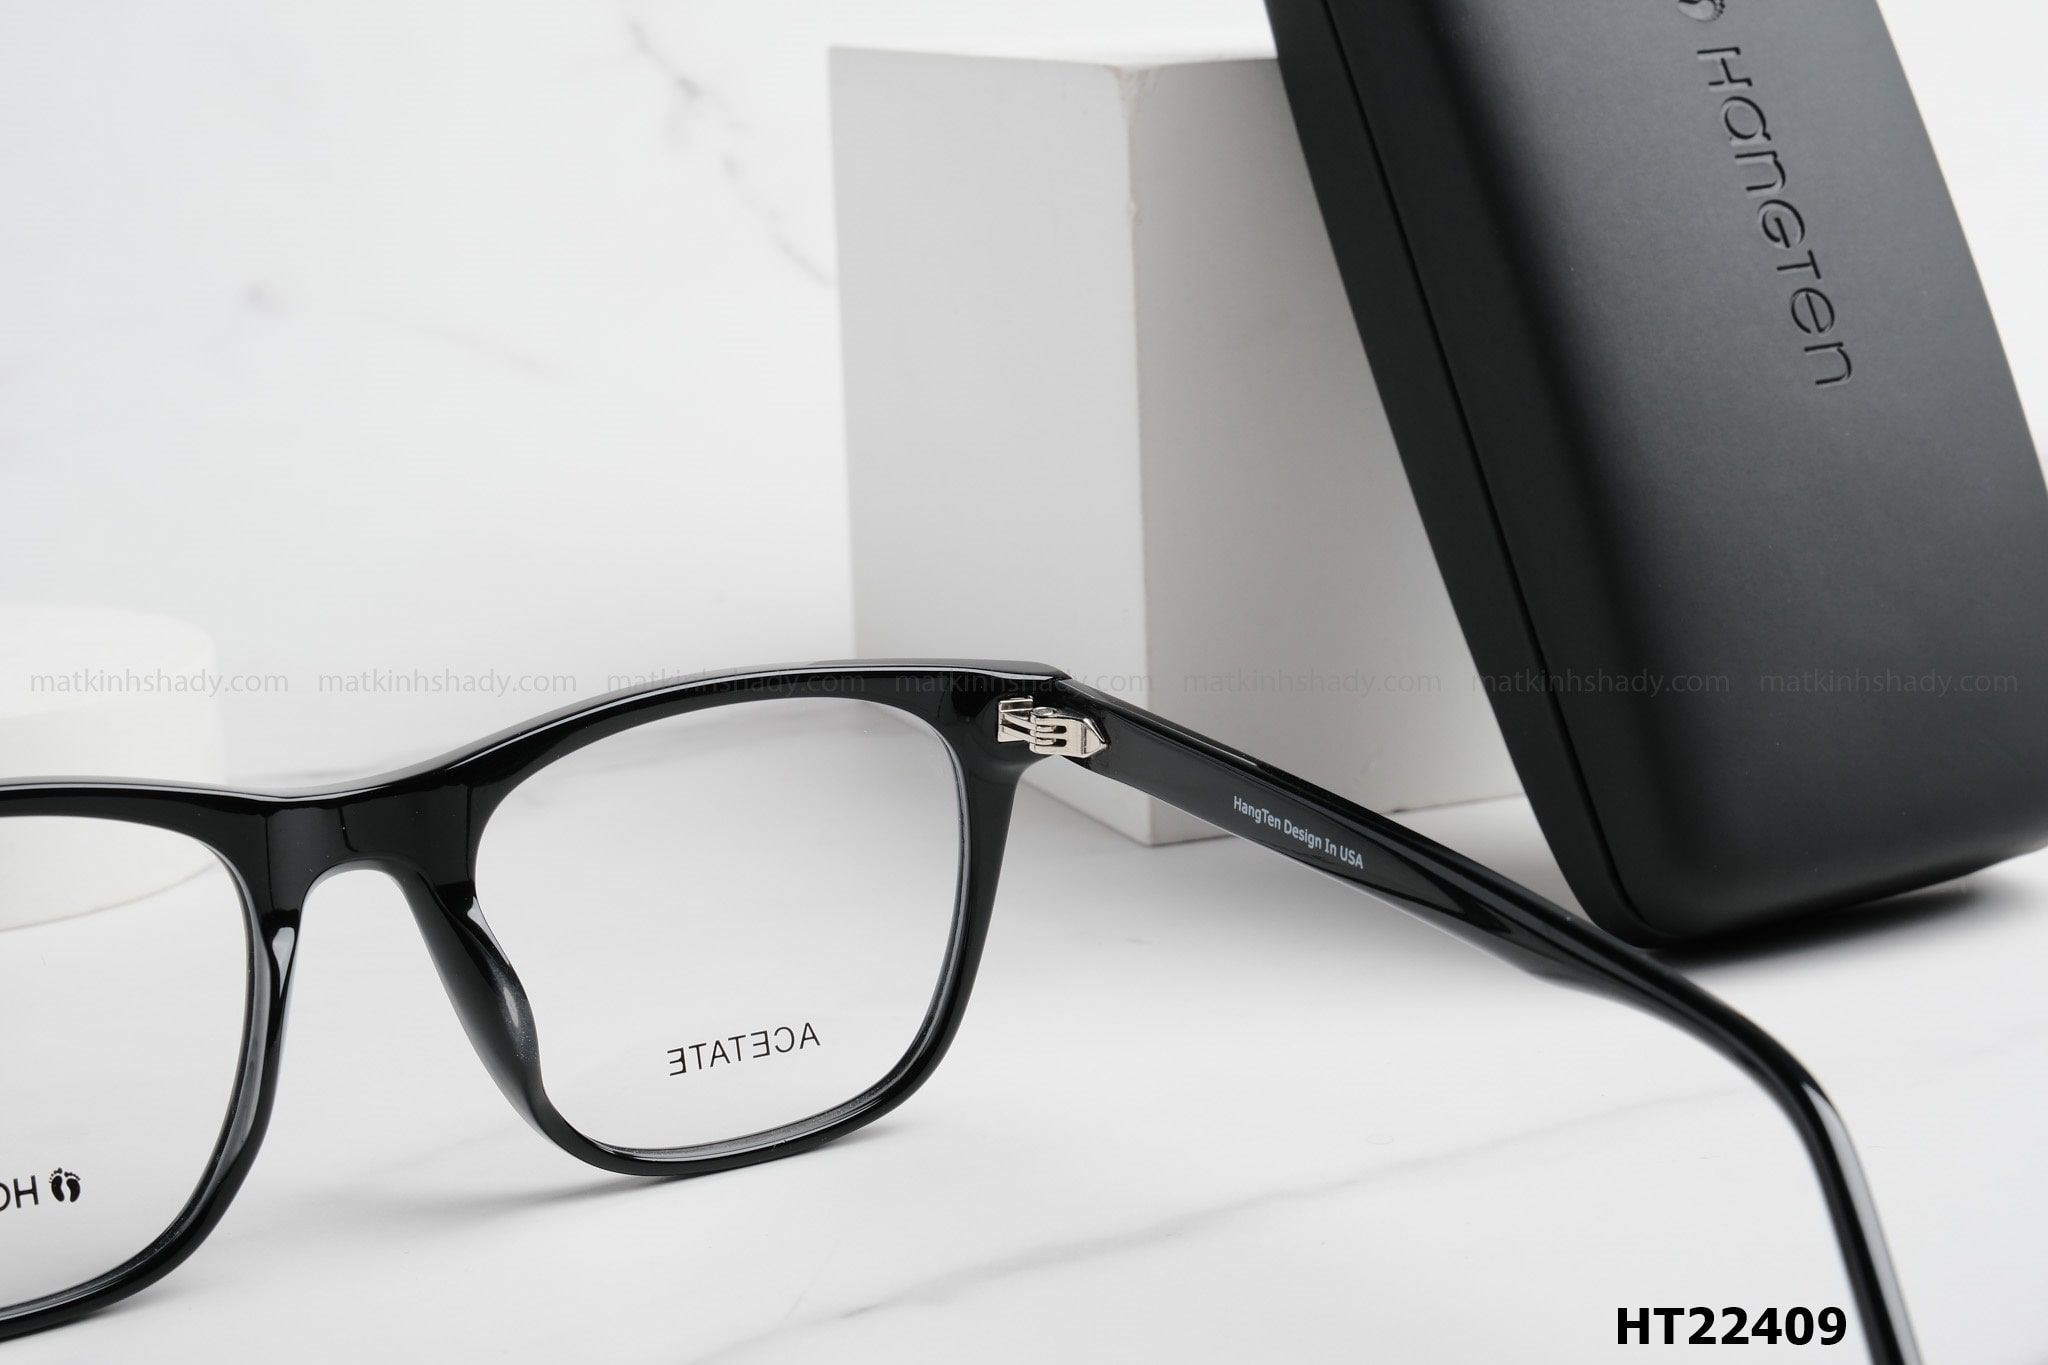  Hangten Eyewear - Glasses - HT22409 